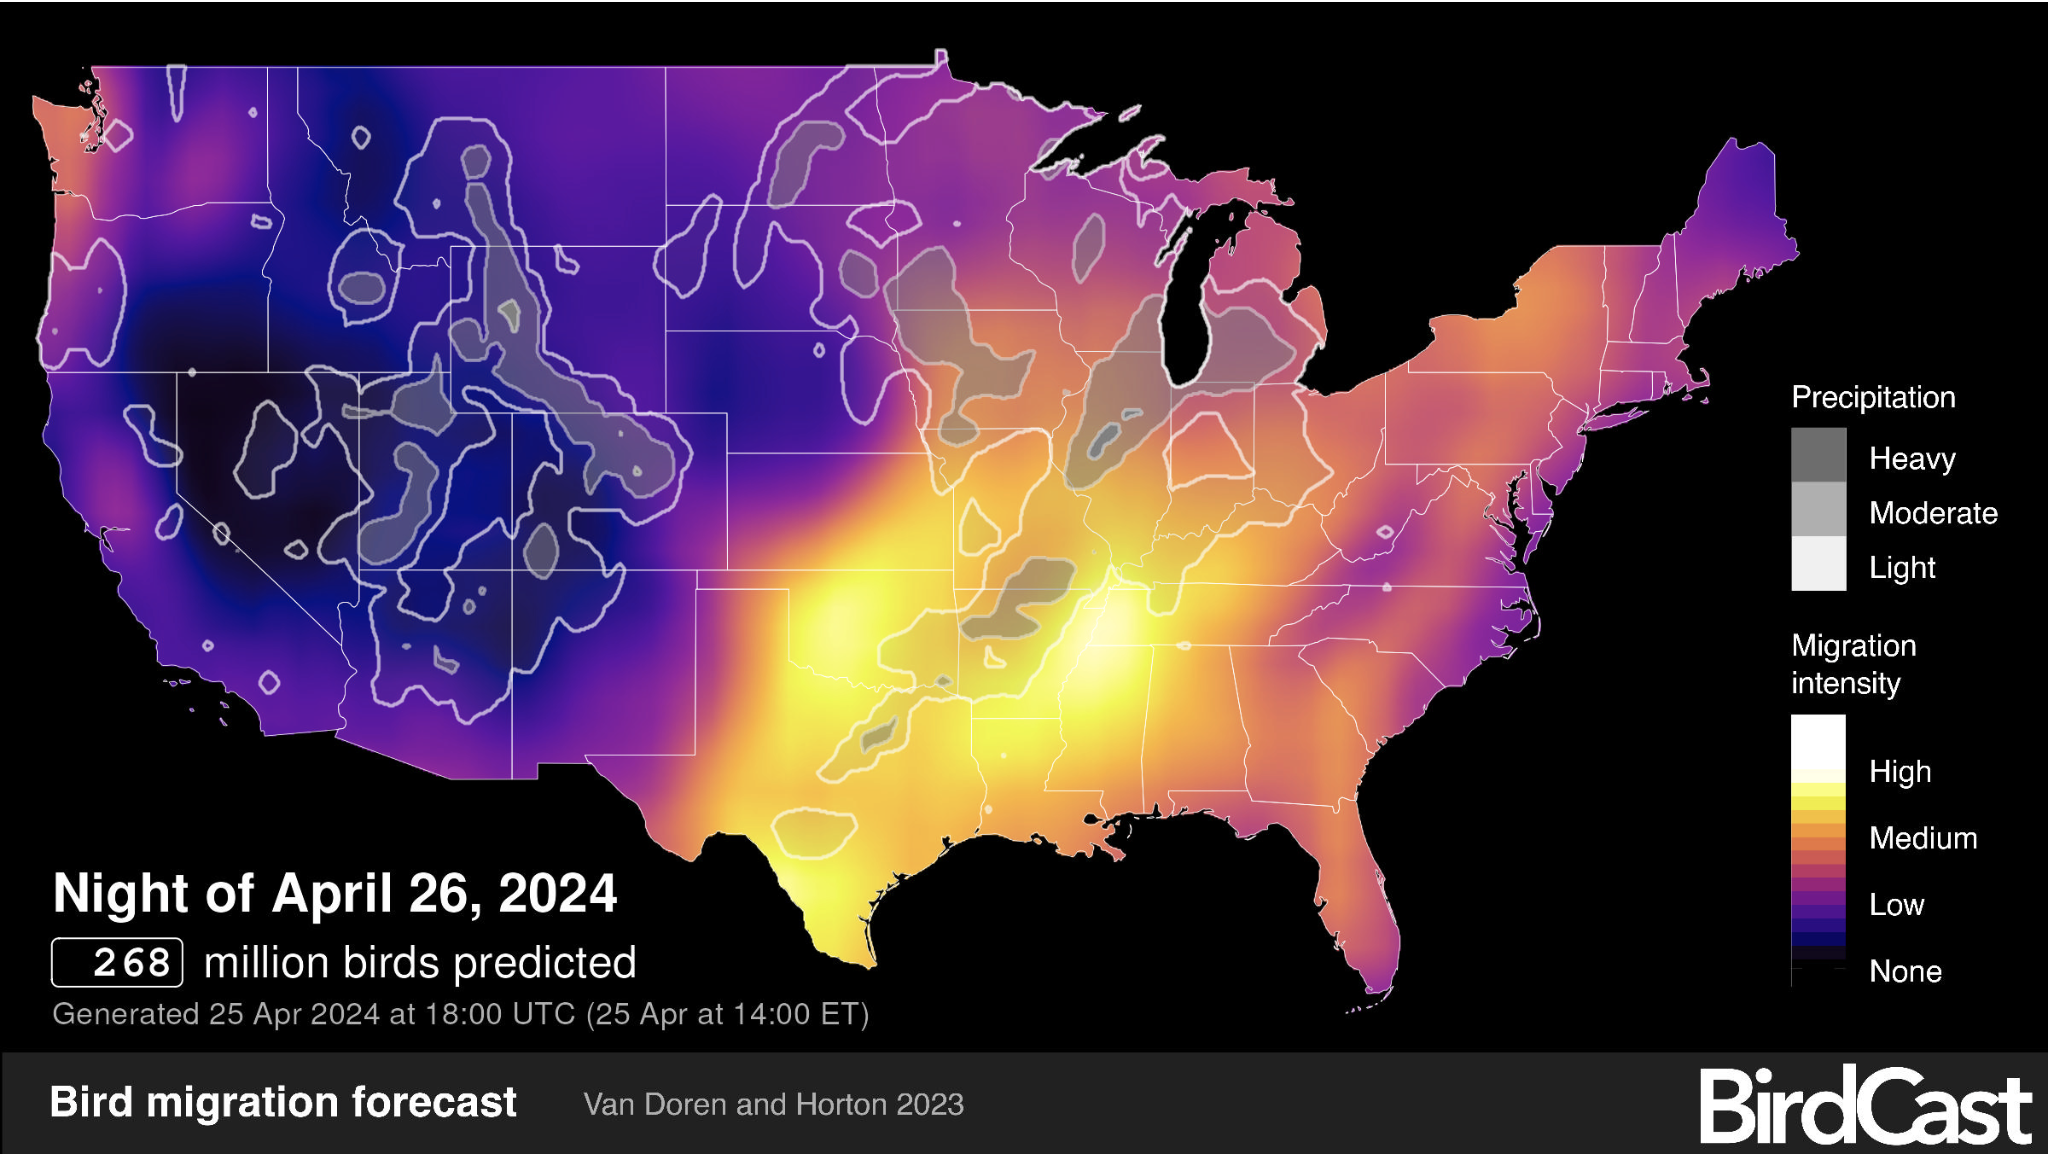 bird migration forecast map for April 26, 2024